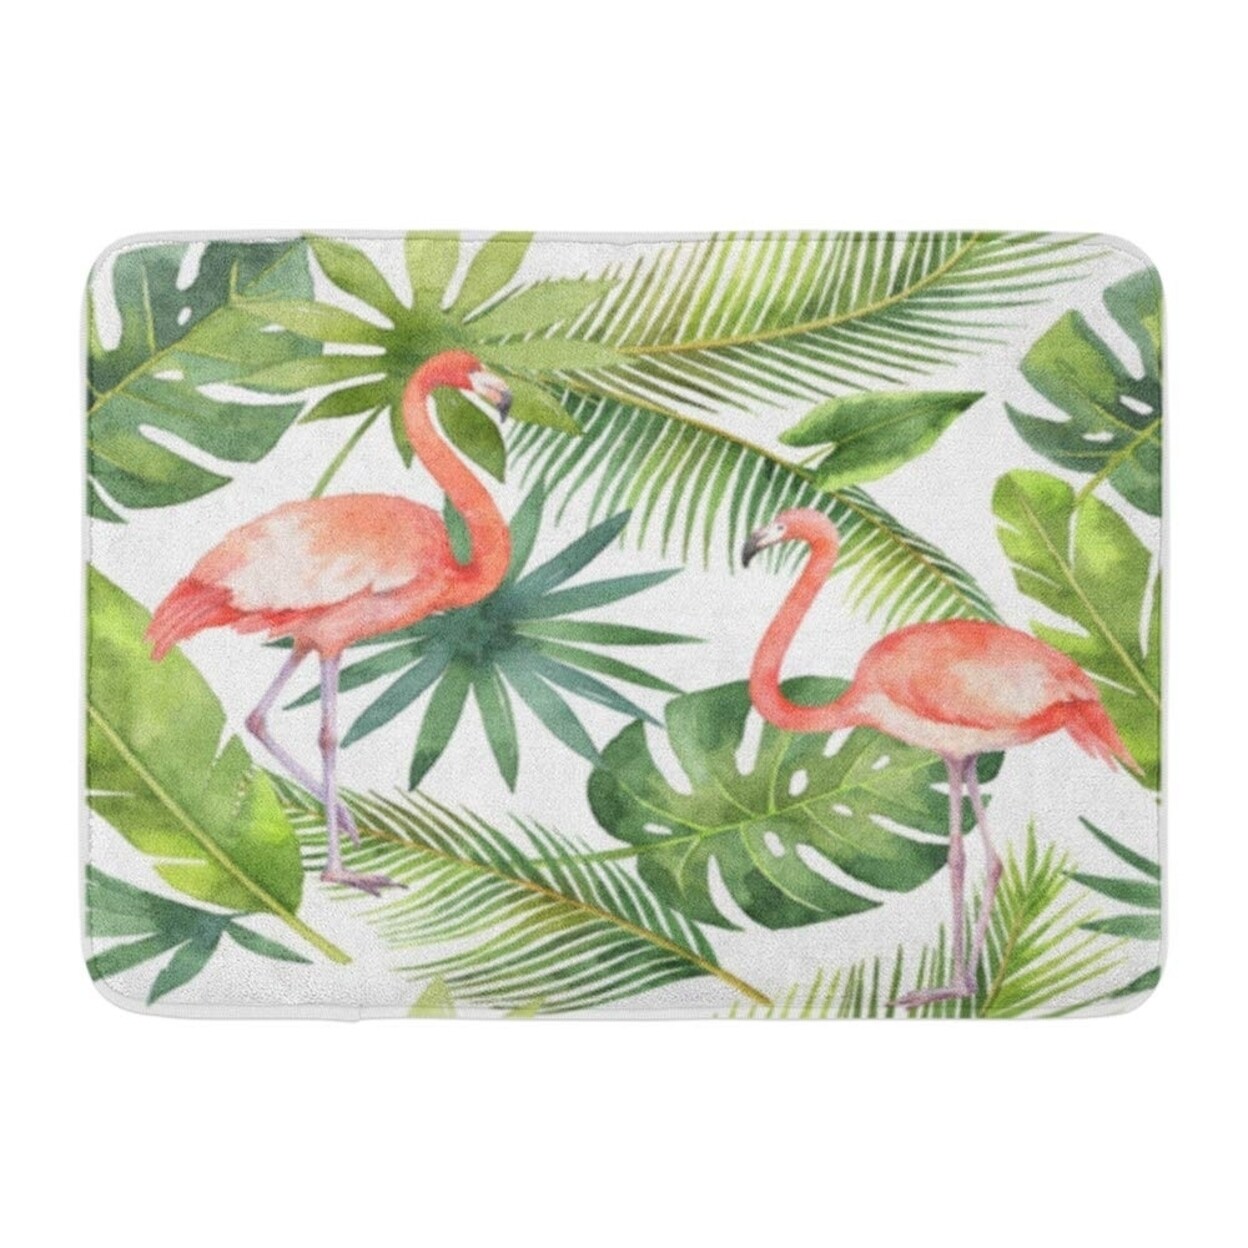 Watercolor Tropical Green Leaves Flamingo Area Rugs Bedroom Kitchen Floor Mat 